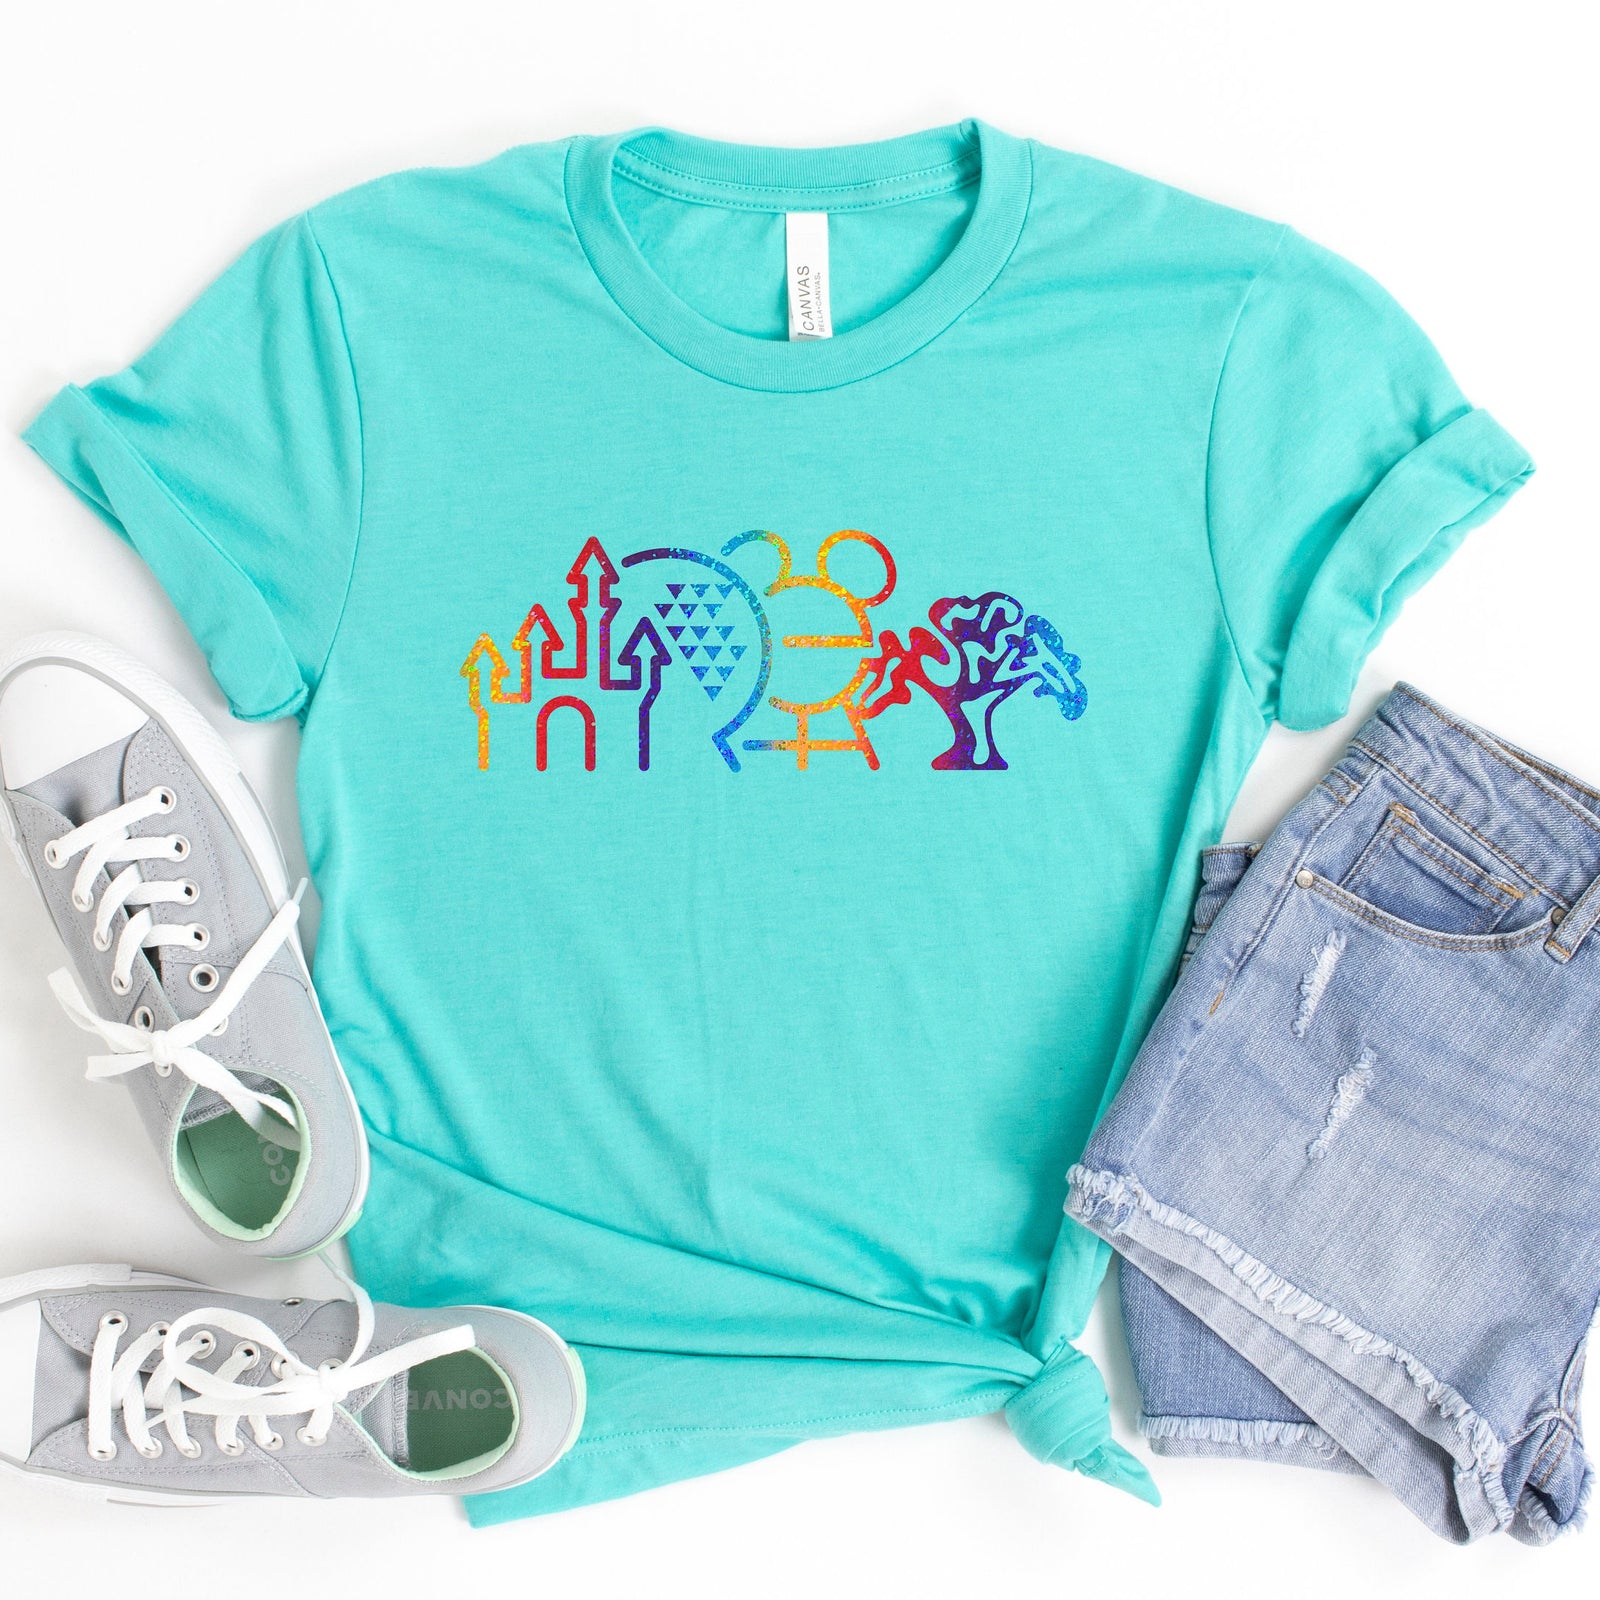 Disney Parks T Shirt - Family Matching Shirts -Epcot - Magic Kingdom - Animal Kingdom - Hollywood Studios - Rainbow Glitter